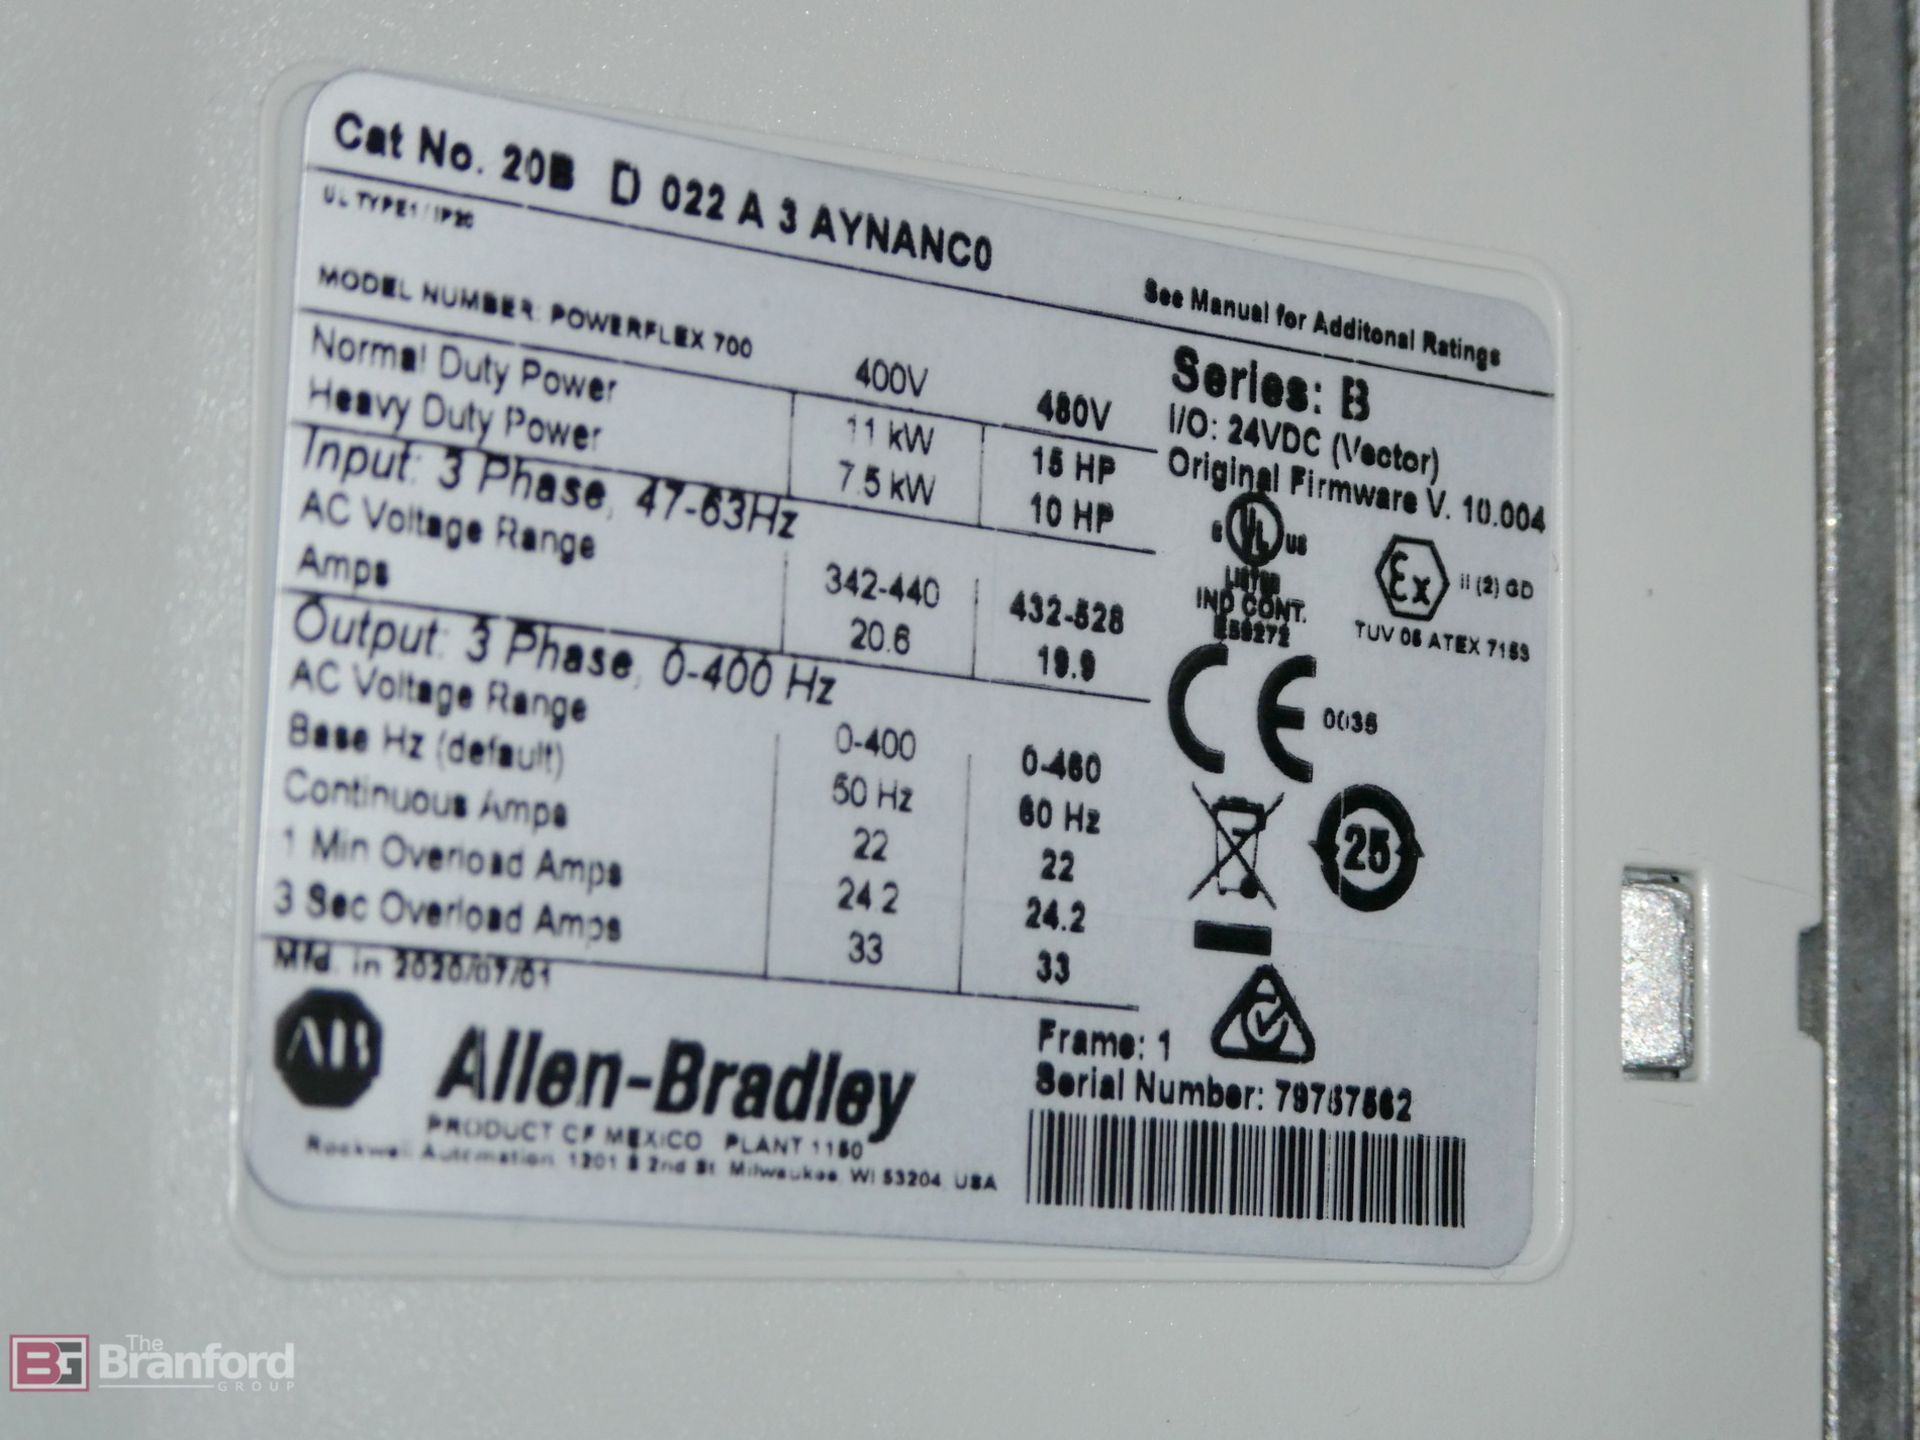 Allen-Bradley Power Flex 700, 3-Phase AC Drive - Image 3 of 3